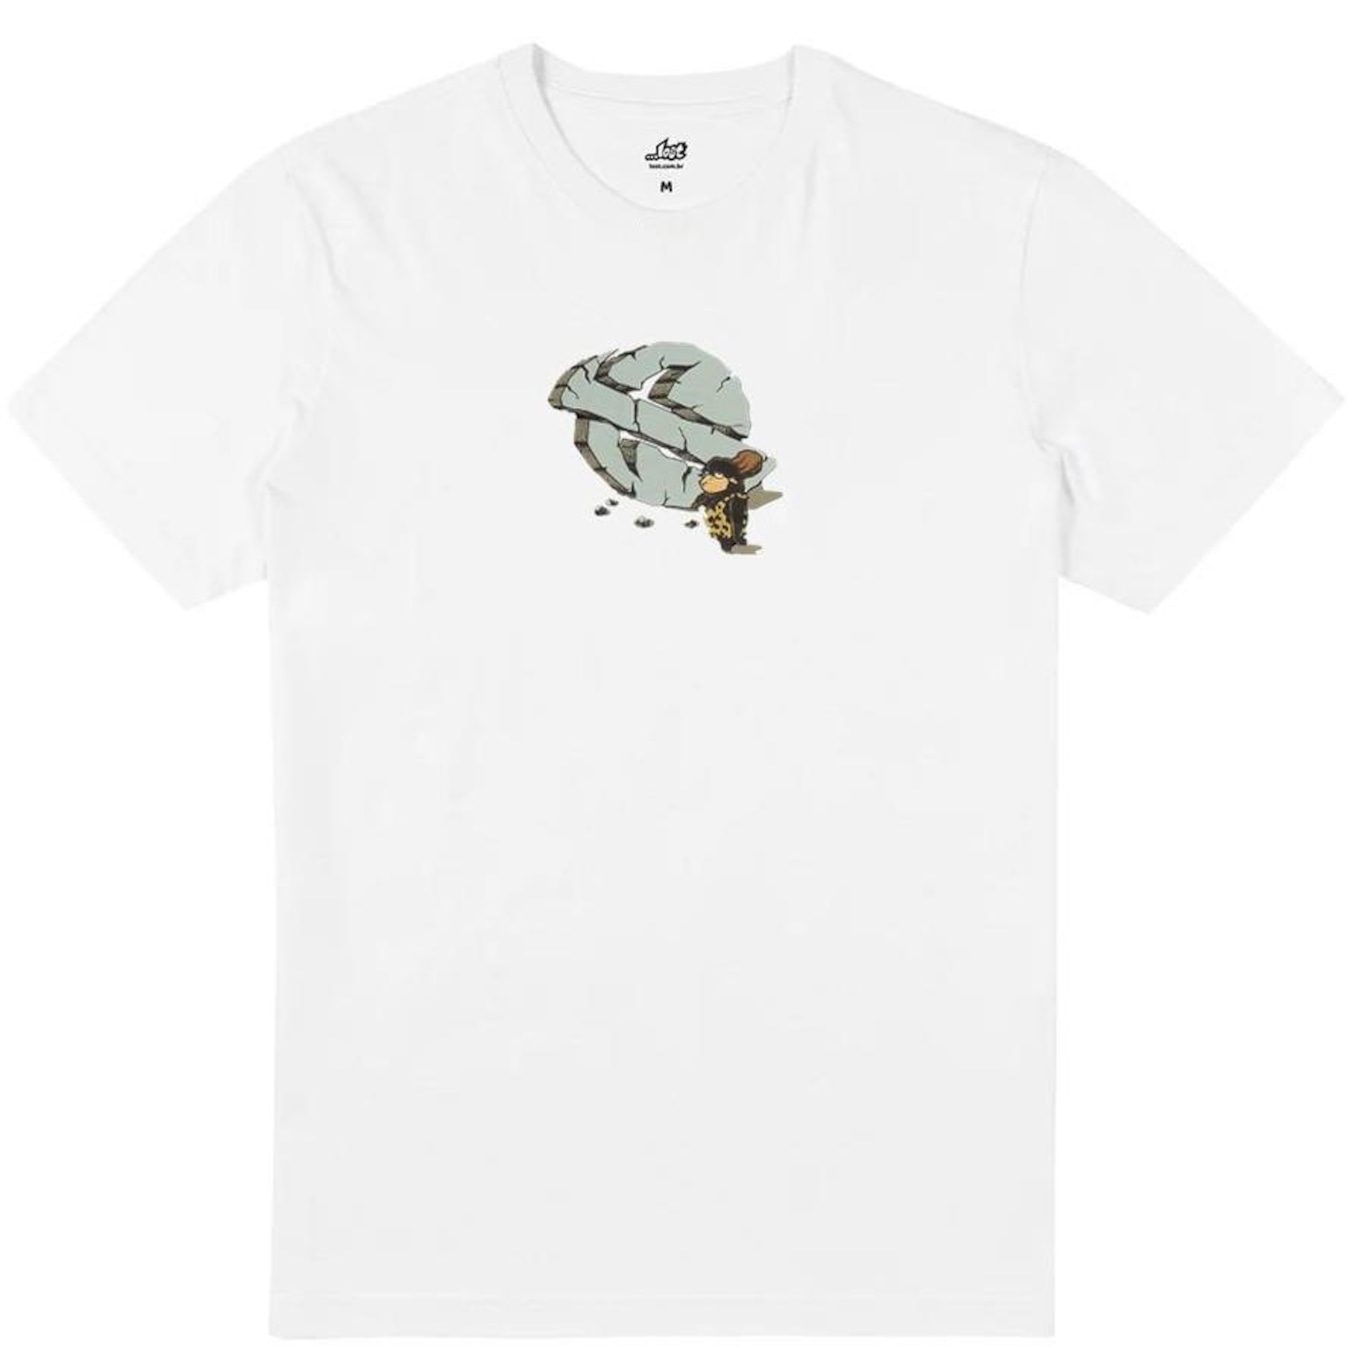 Camiseta Camp Half-Blood (Centauro) - Mushroom Shop